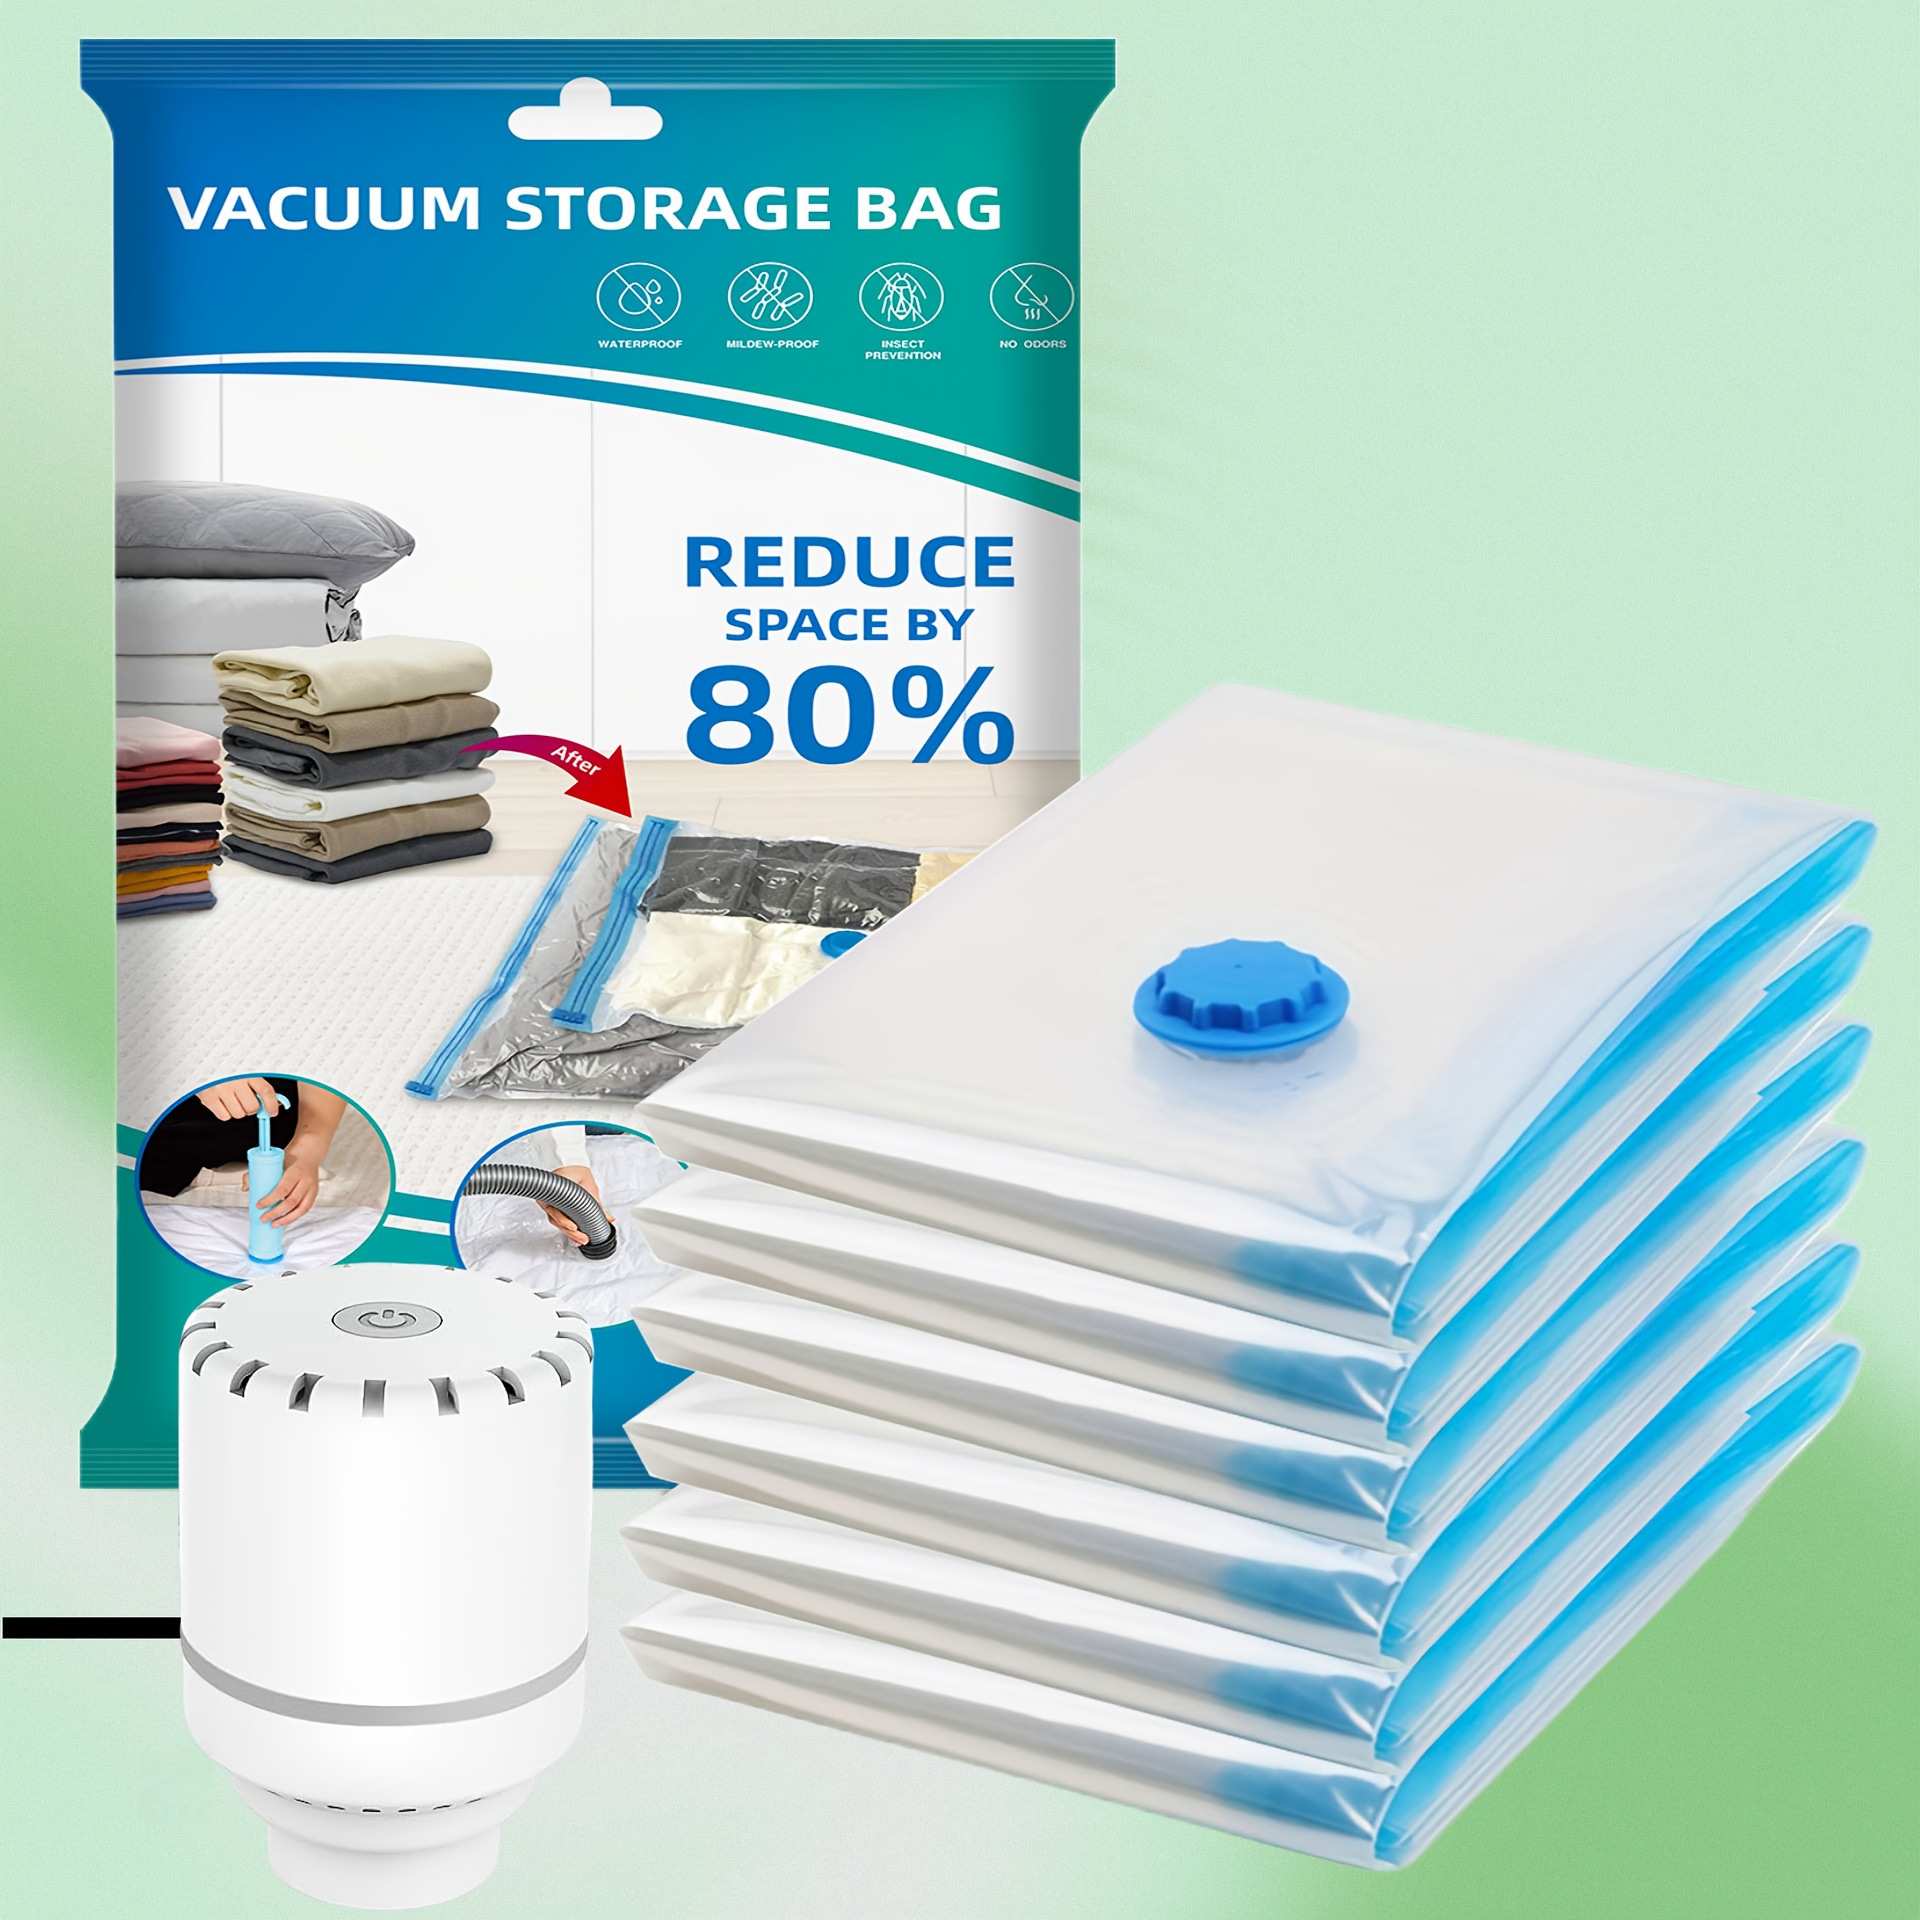 

6pcs Vacuum Storage Bag With Electric Pump, Portable Plastic Travel Bag Clothes Storage Bag, For Blankets, Bedding, Clothes, Quilts, Duvets, Ideal Home Supplies, Storage Essentials